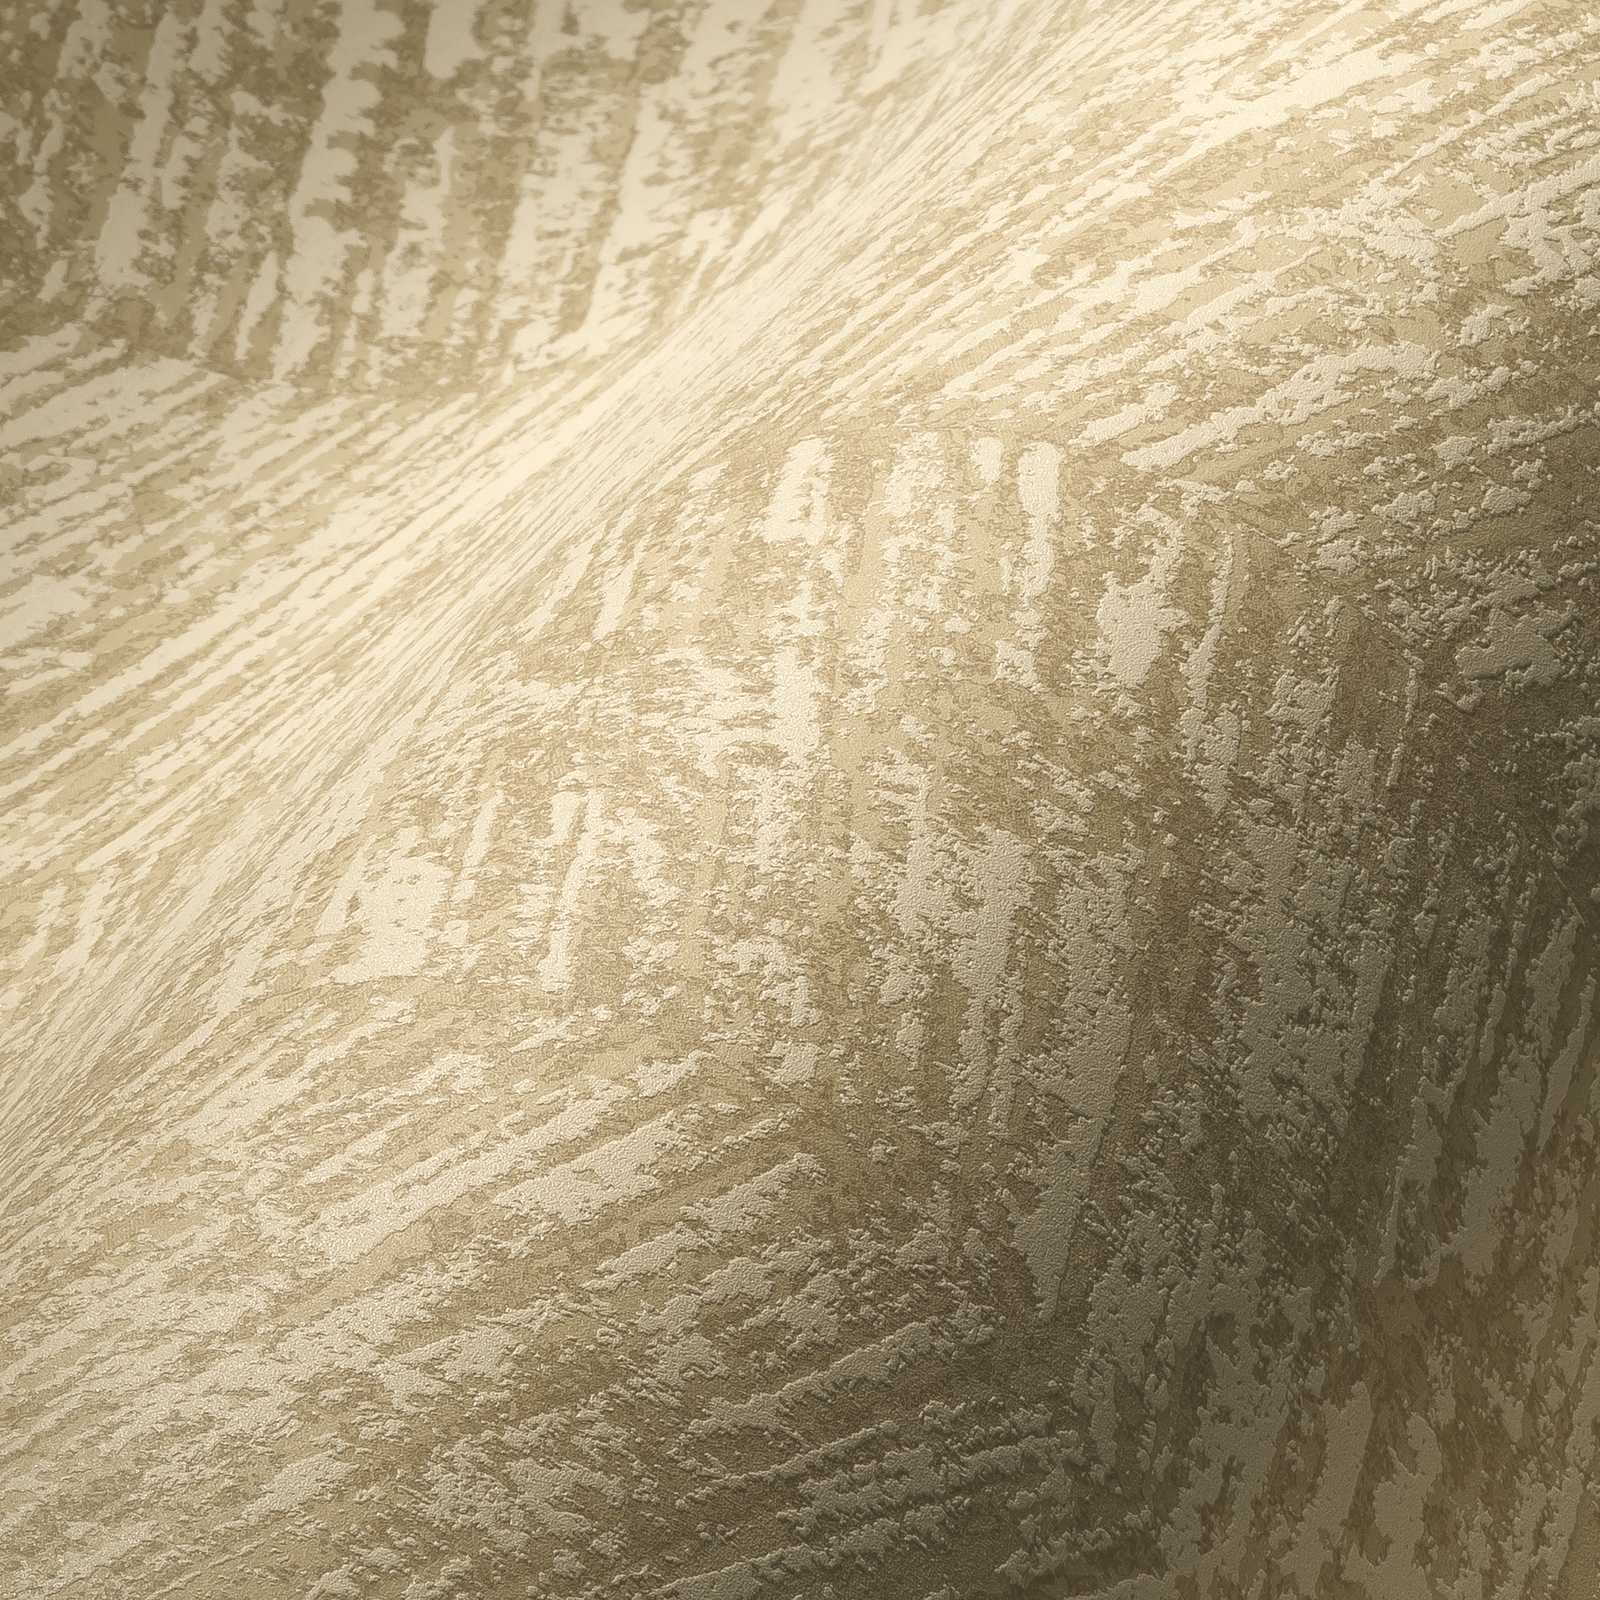             Ethno wallpaper non-woven with texture effect - beige, metallic
        